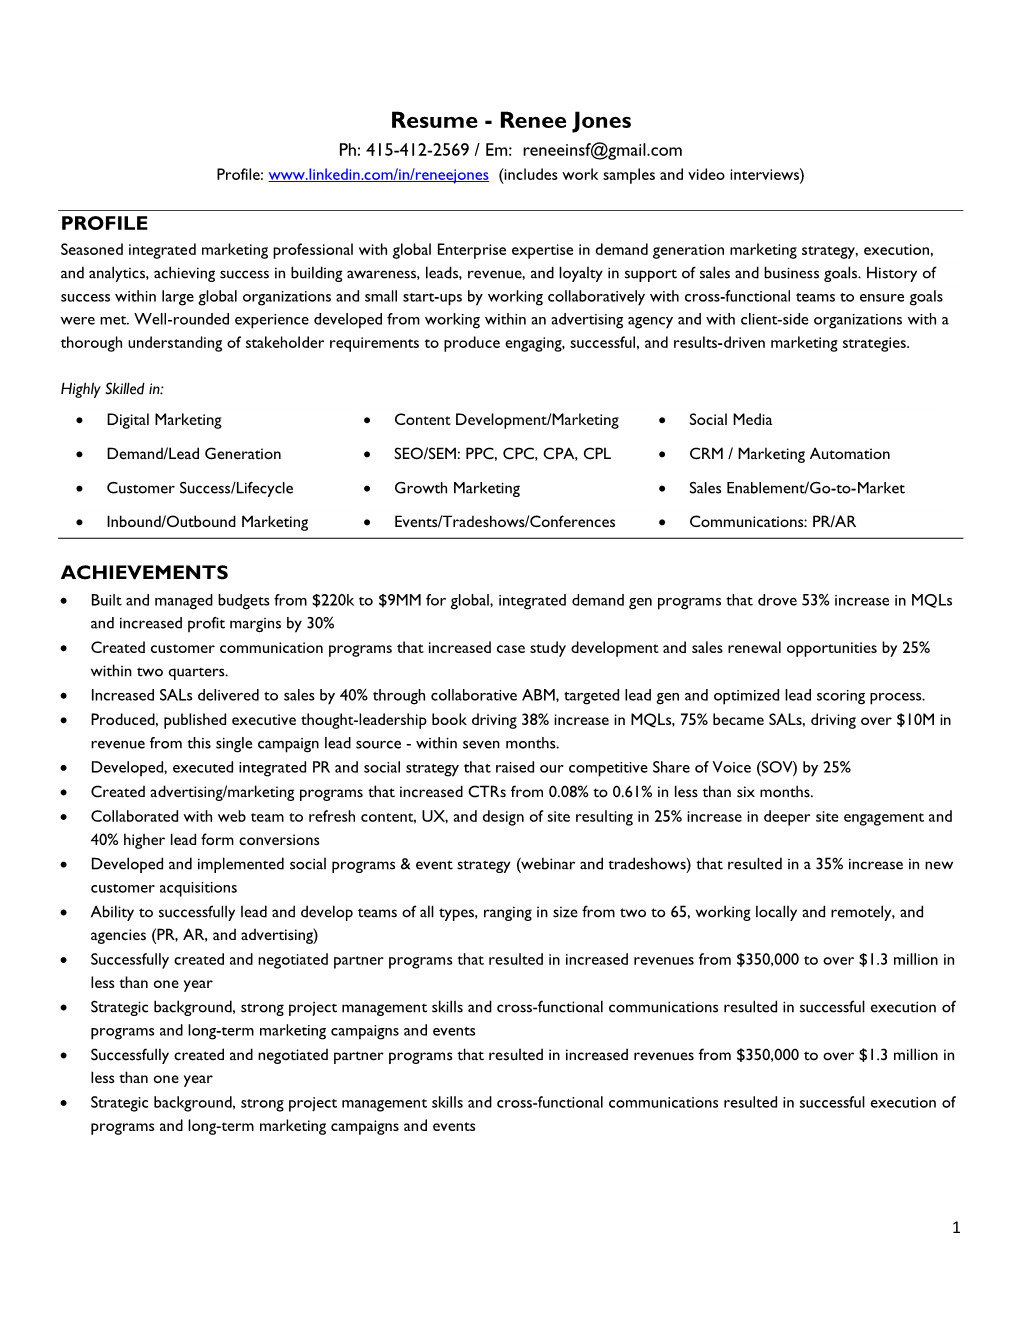 Resume - Renee Jones Ph: 415-412-2569 / Em: Reneeinsf@Gmail.Com Profile: (Includes Work Samples and Video Interviews)